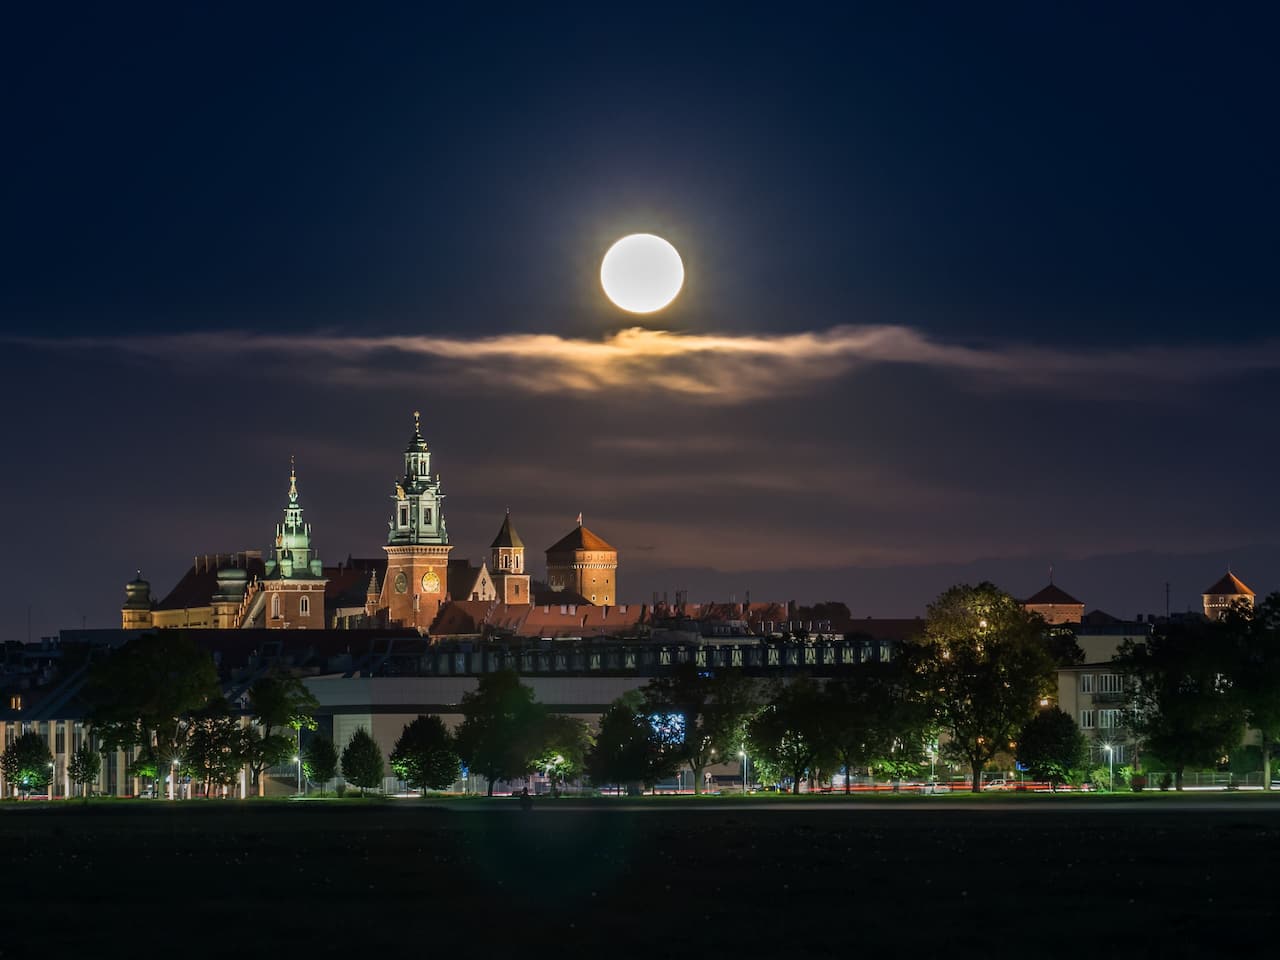 Wawel Castle and moon as seen from Blonia meadow